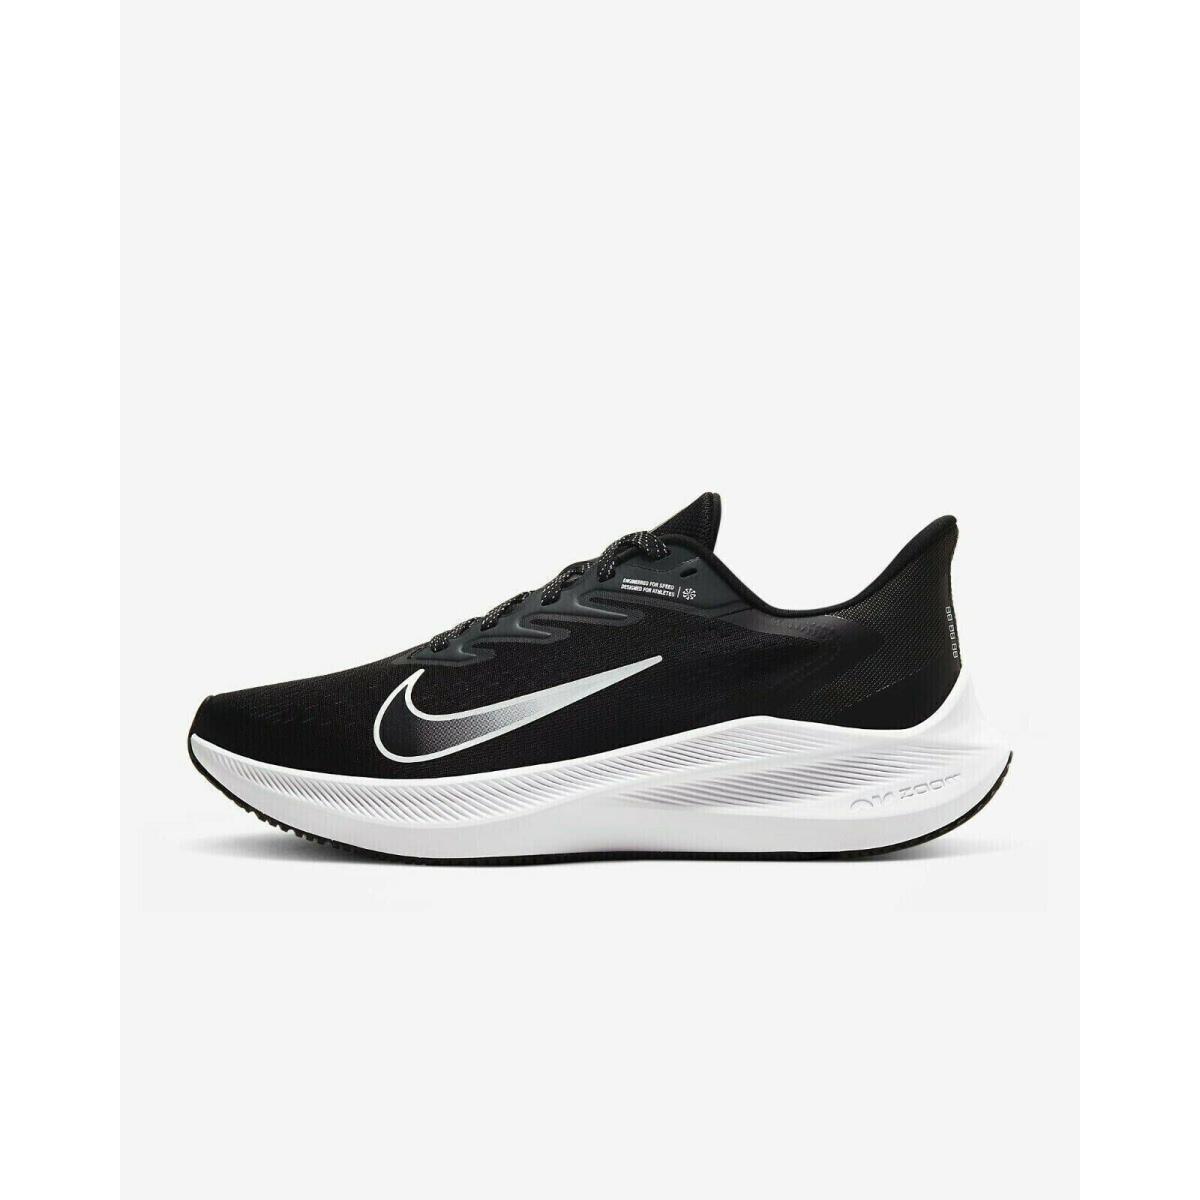 Nike Zoom Winflo 7 Womens Size 7.5 Black White Running Shoes CJ0302 005